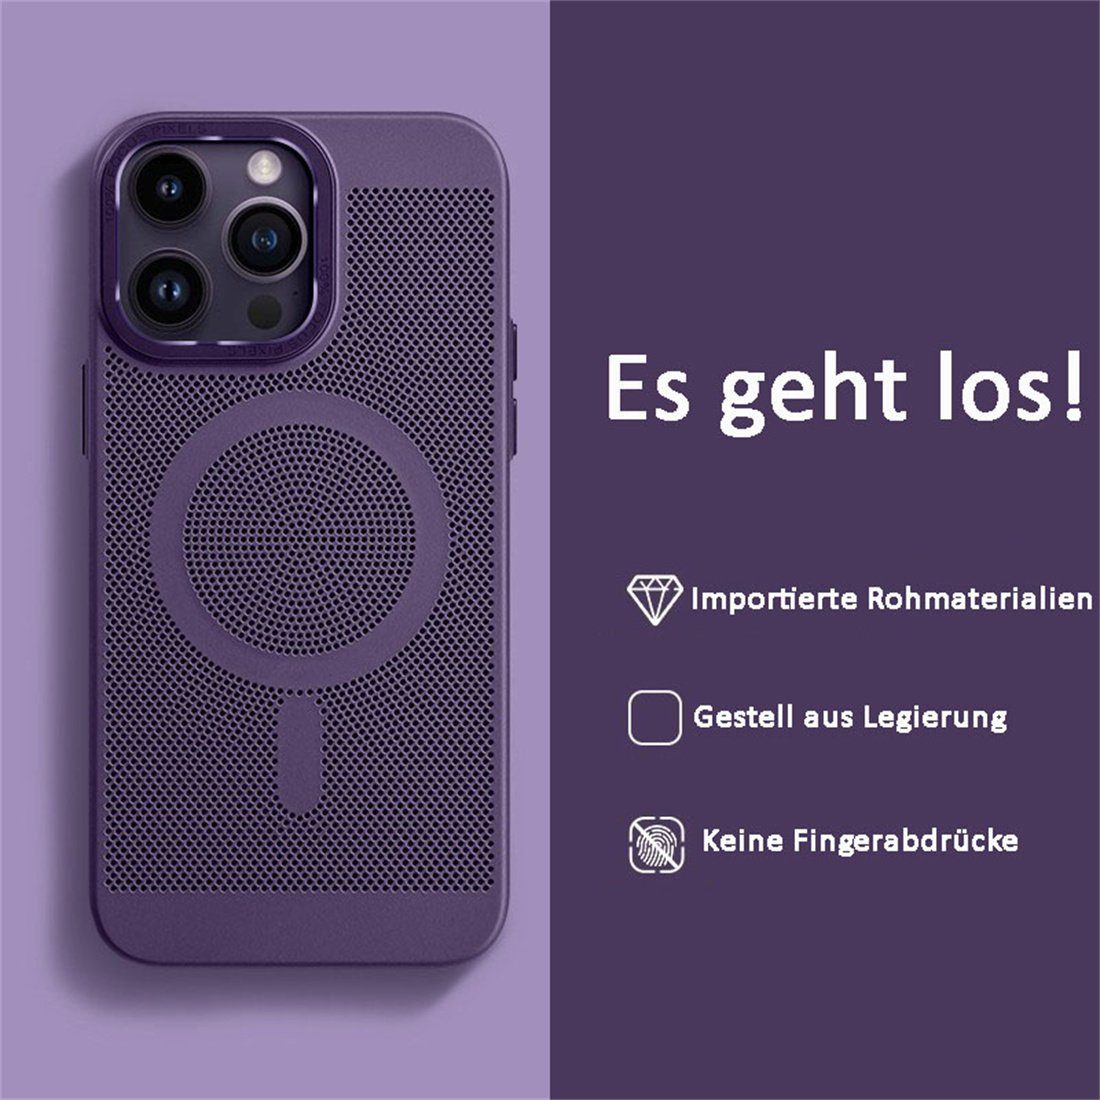 Handy-Hüllen 14 lila Handytasche Für Saughülle Plus,Wärmeschutzhülle,Magnetische iPhone DÖRÖY